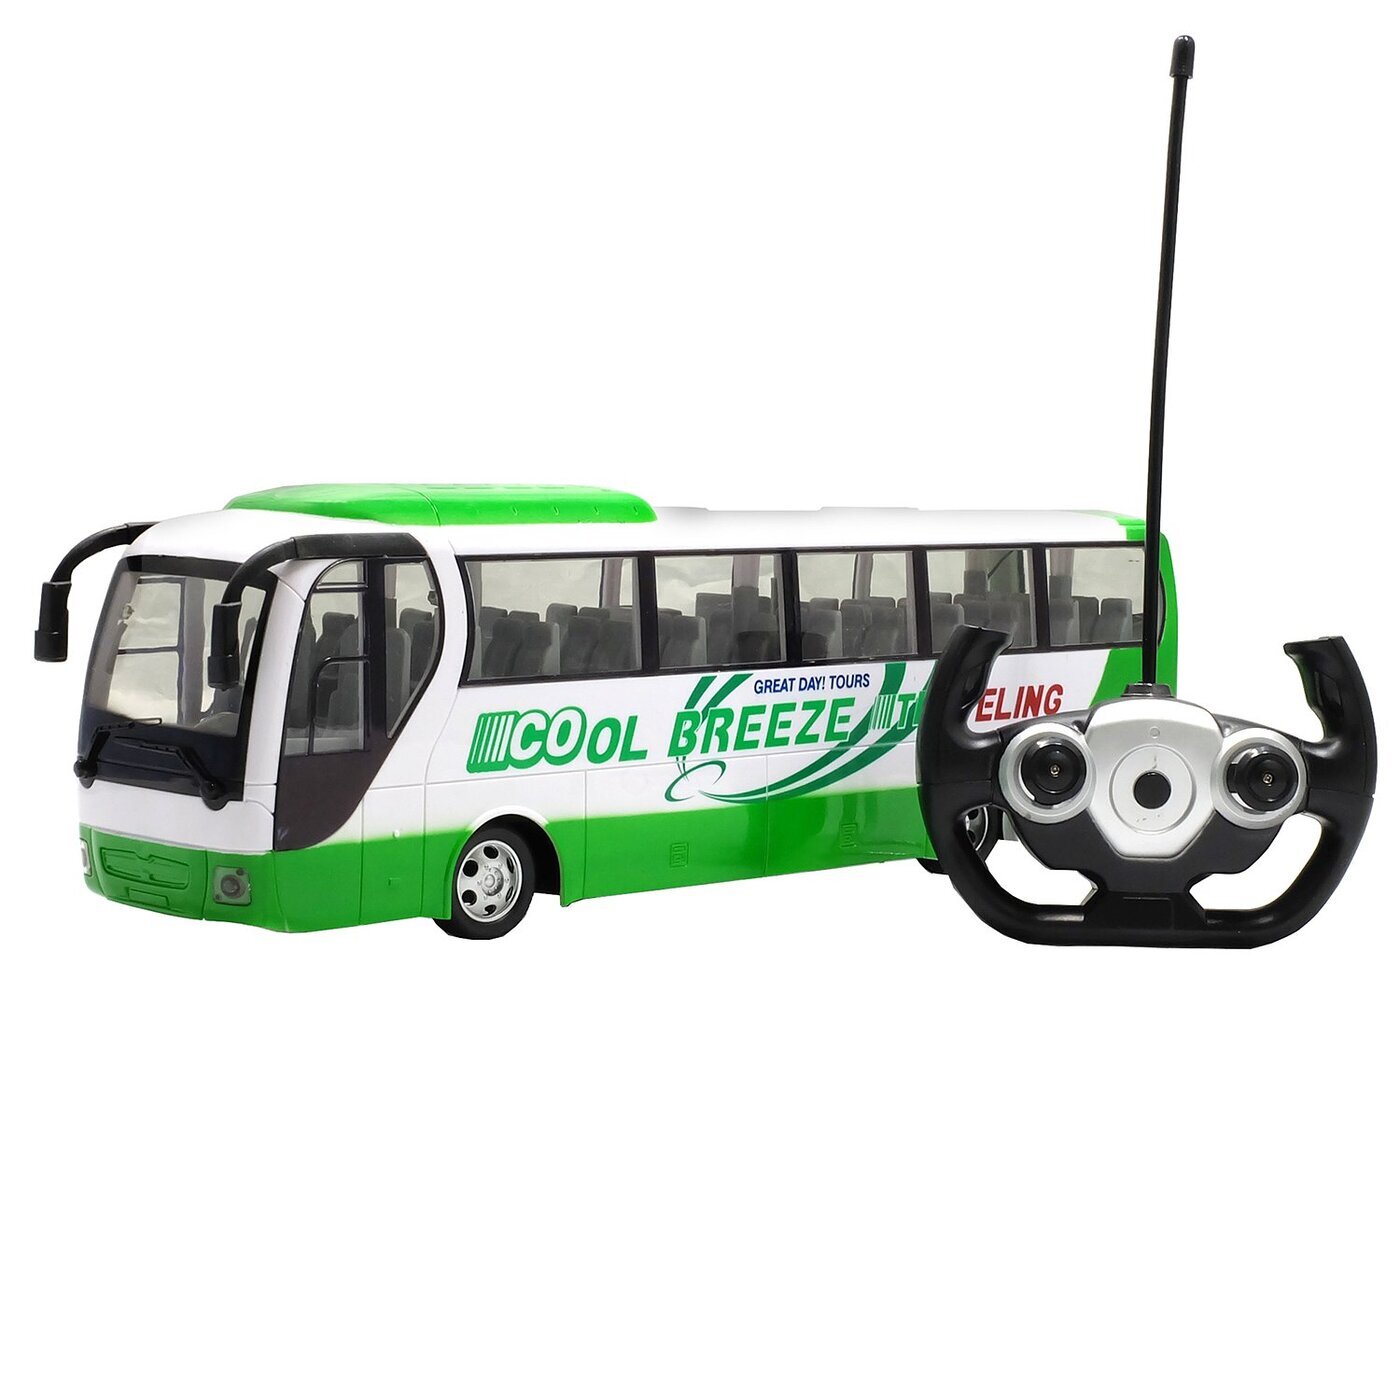 Автобус HK (SHENZHEN) INDUSTRIES DEVELOPMENT CO., LTD р/у 666-699A Green hk автобус радиоуправляемый 666 699a